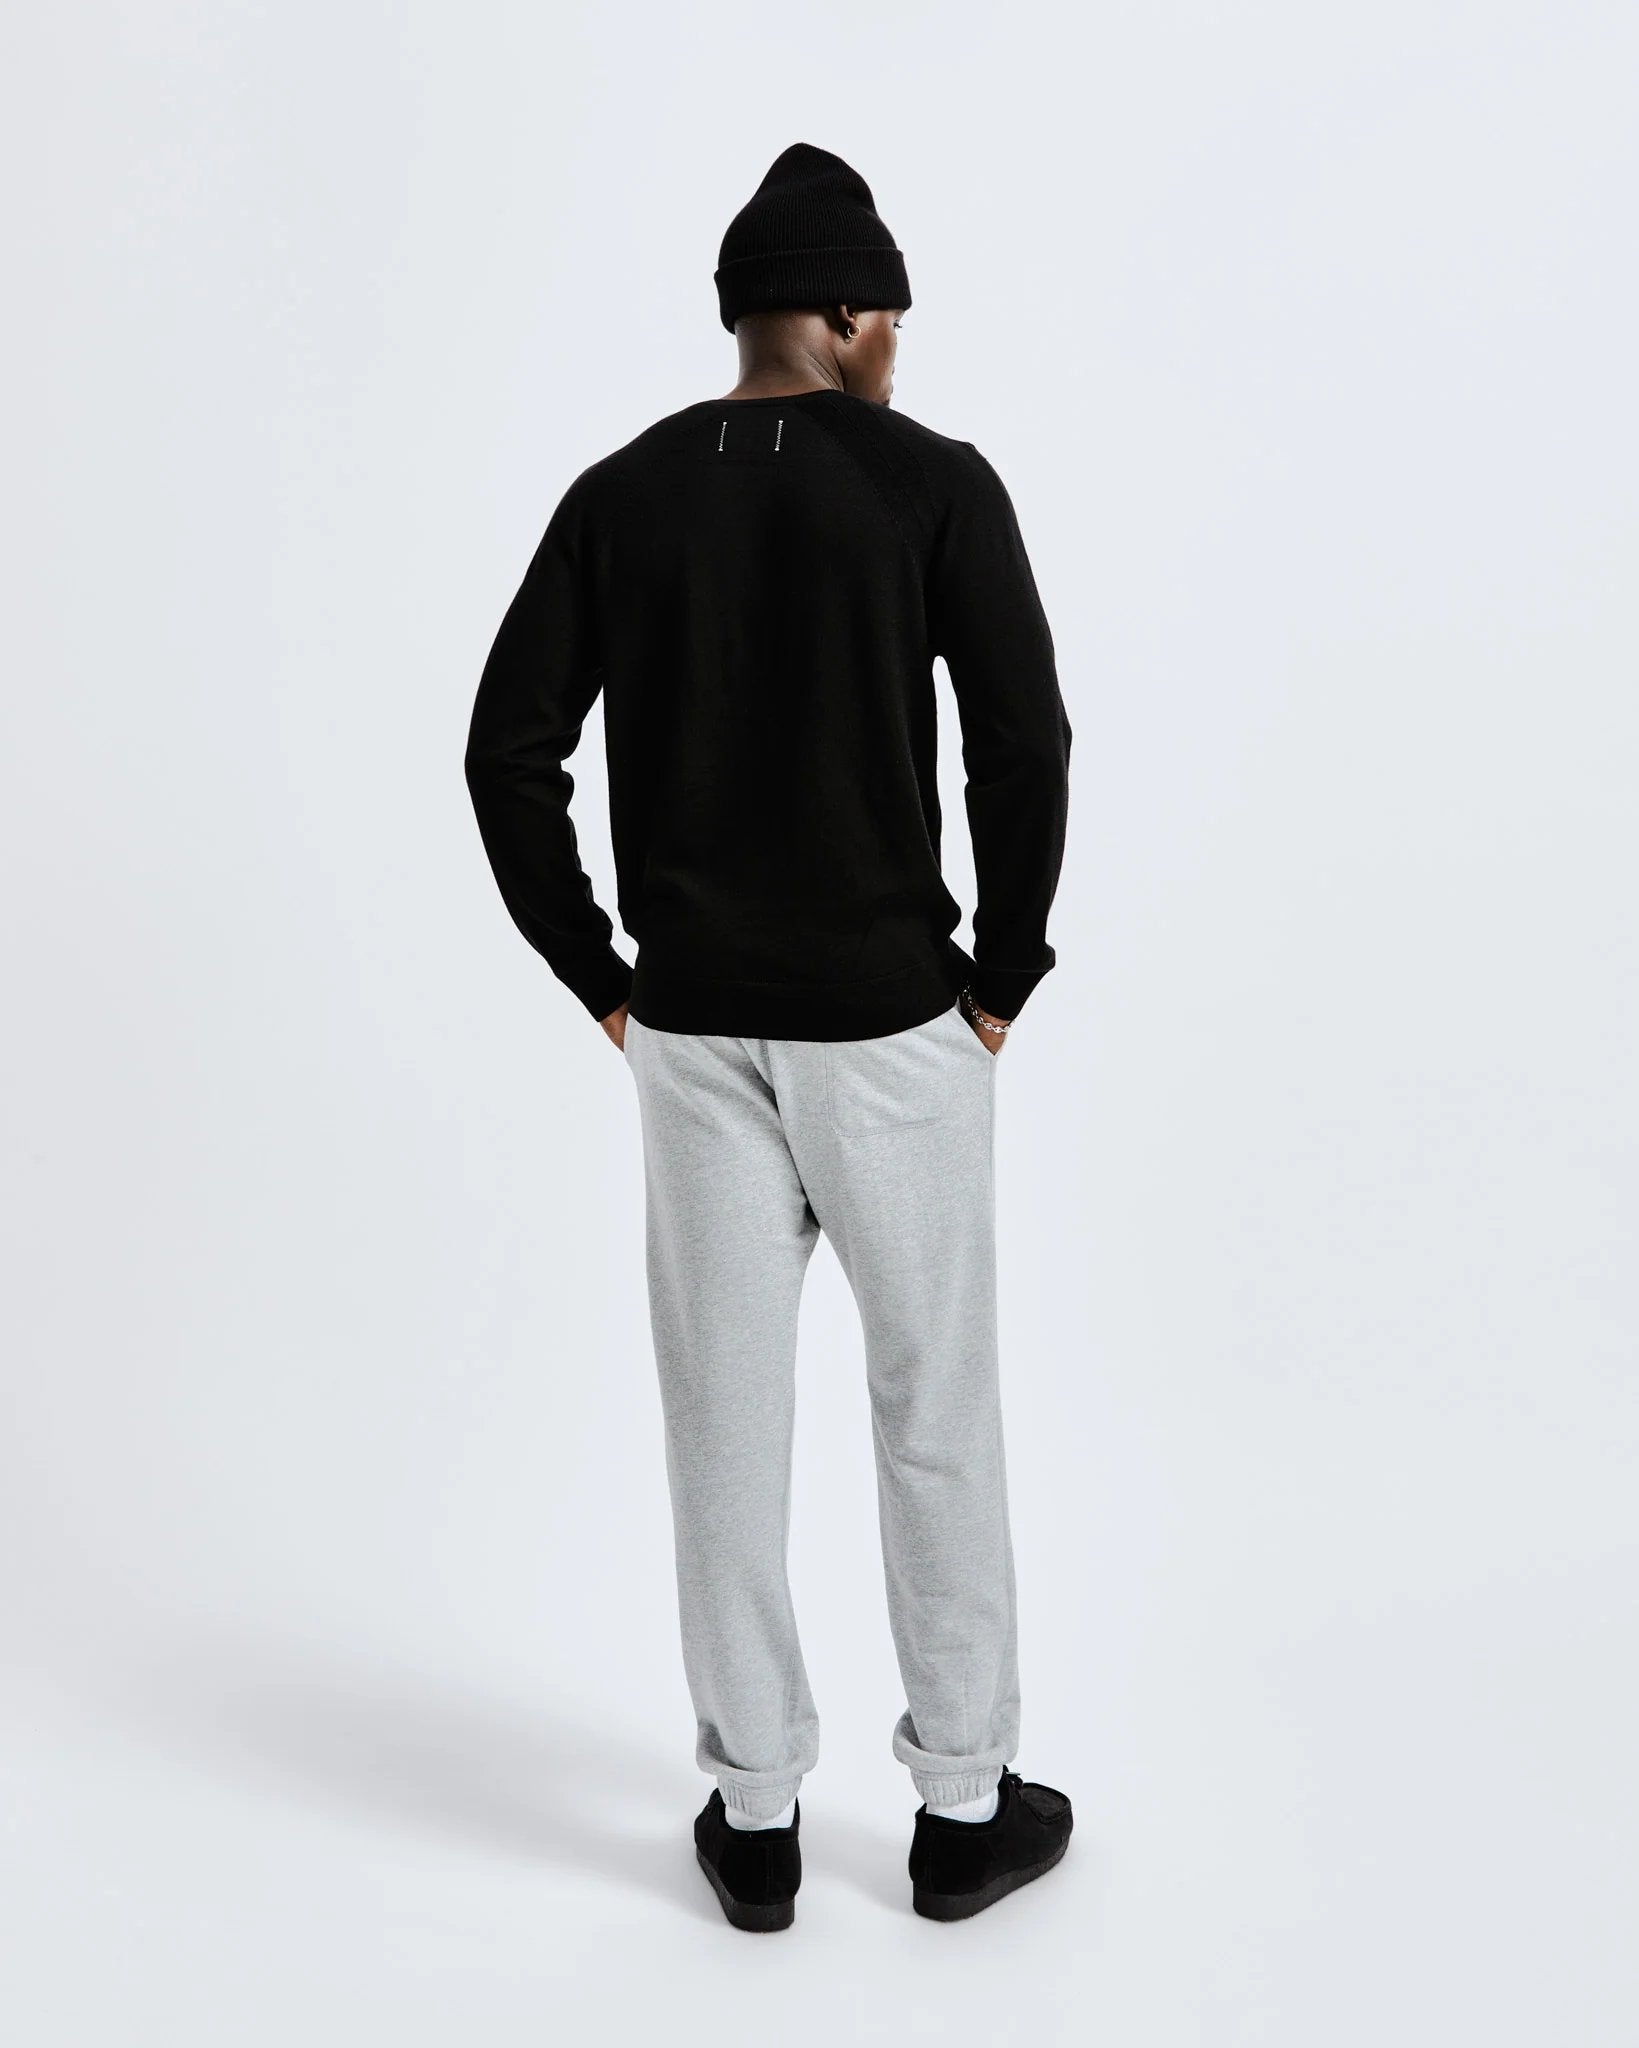 Harry Crewneck Sweater - Reigning Champ - Danali - RC-6036-BLACK-M